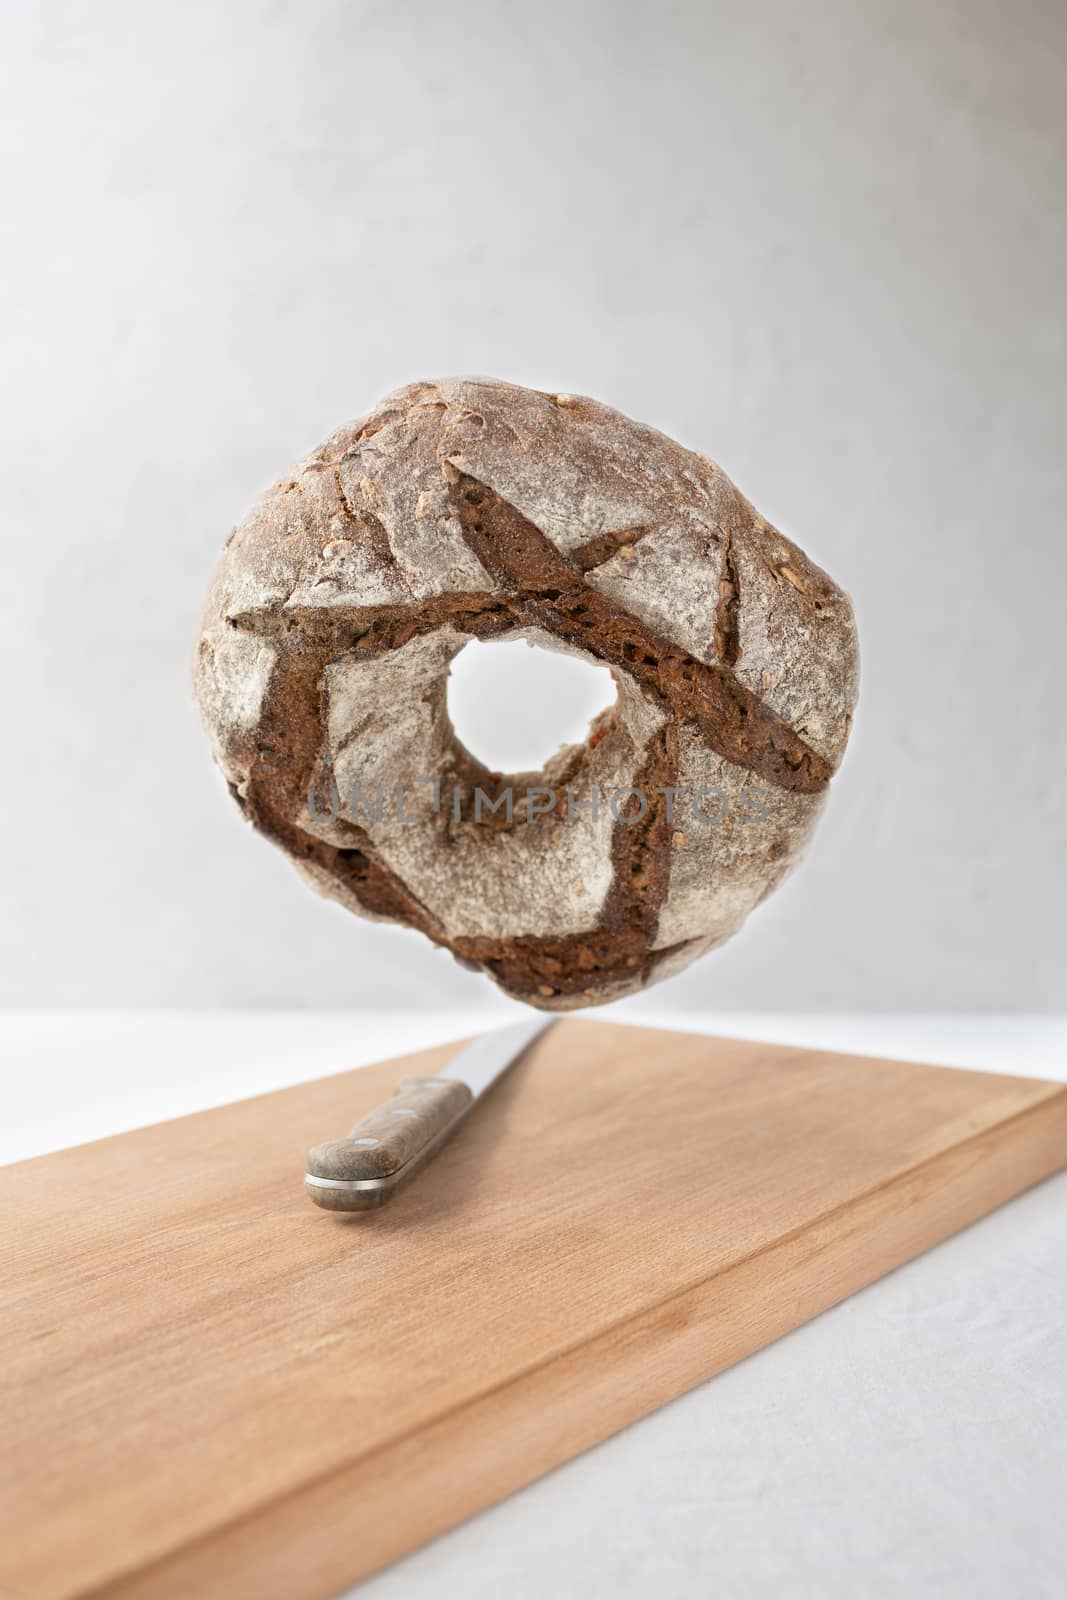 A delicious freshly baked rye bread ruddy by sashokddt